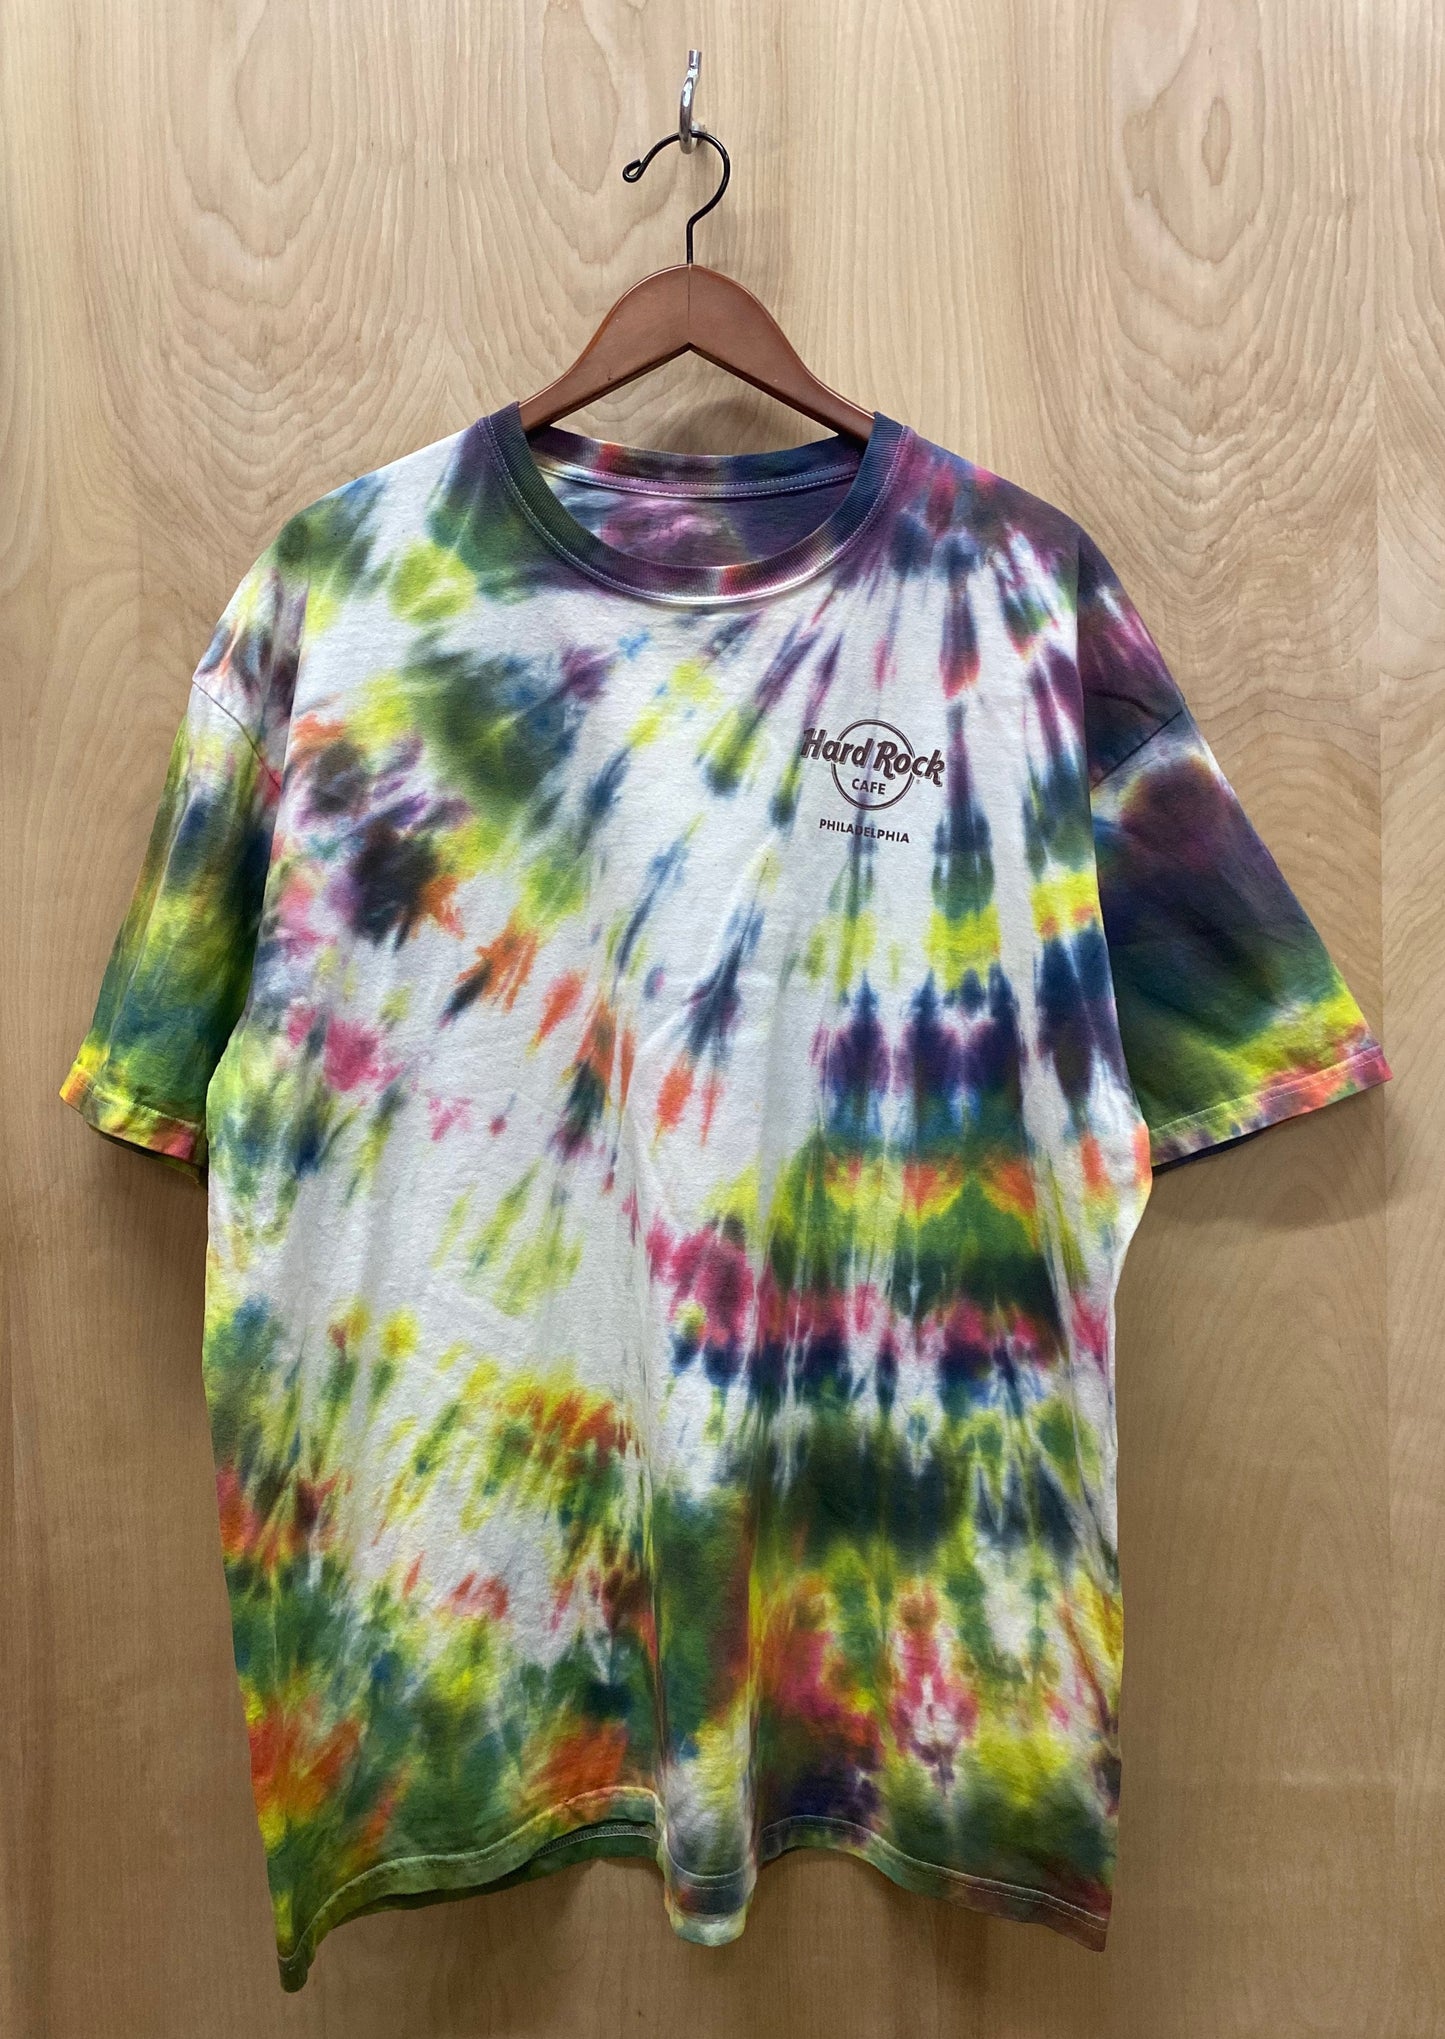 HardRock Cafe "Freedom to Rock" Tye-Dye T-Shirt (6556975136848)